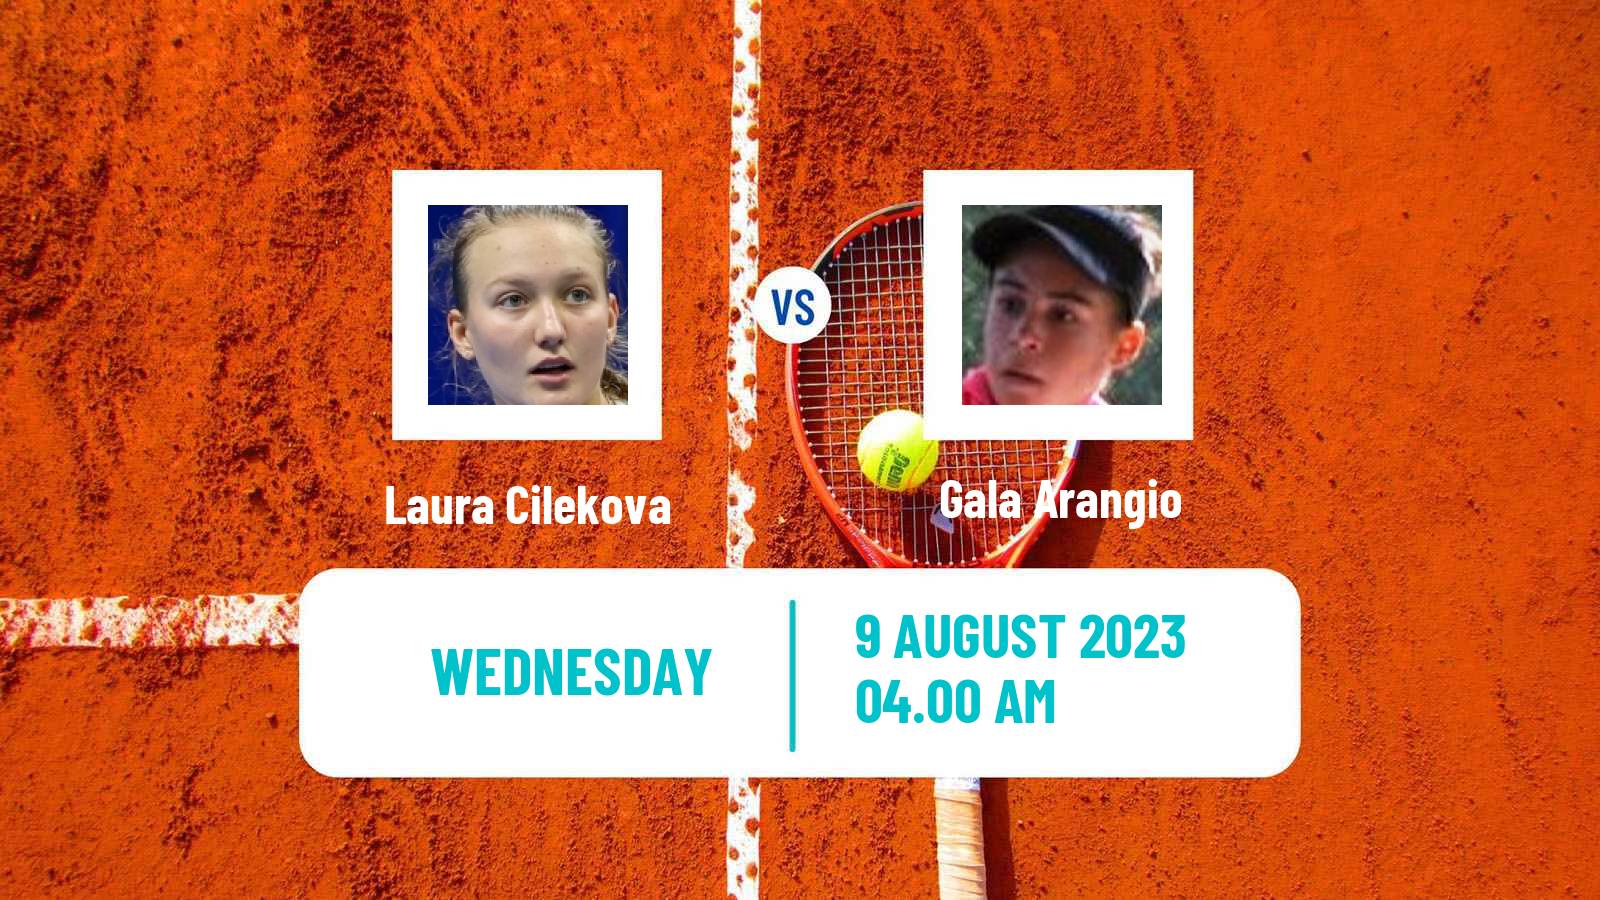 Tennis ITF W15 Monastir 22 Women Laura Cilekova - Gala Arangio